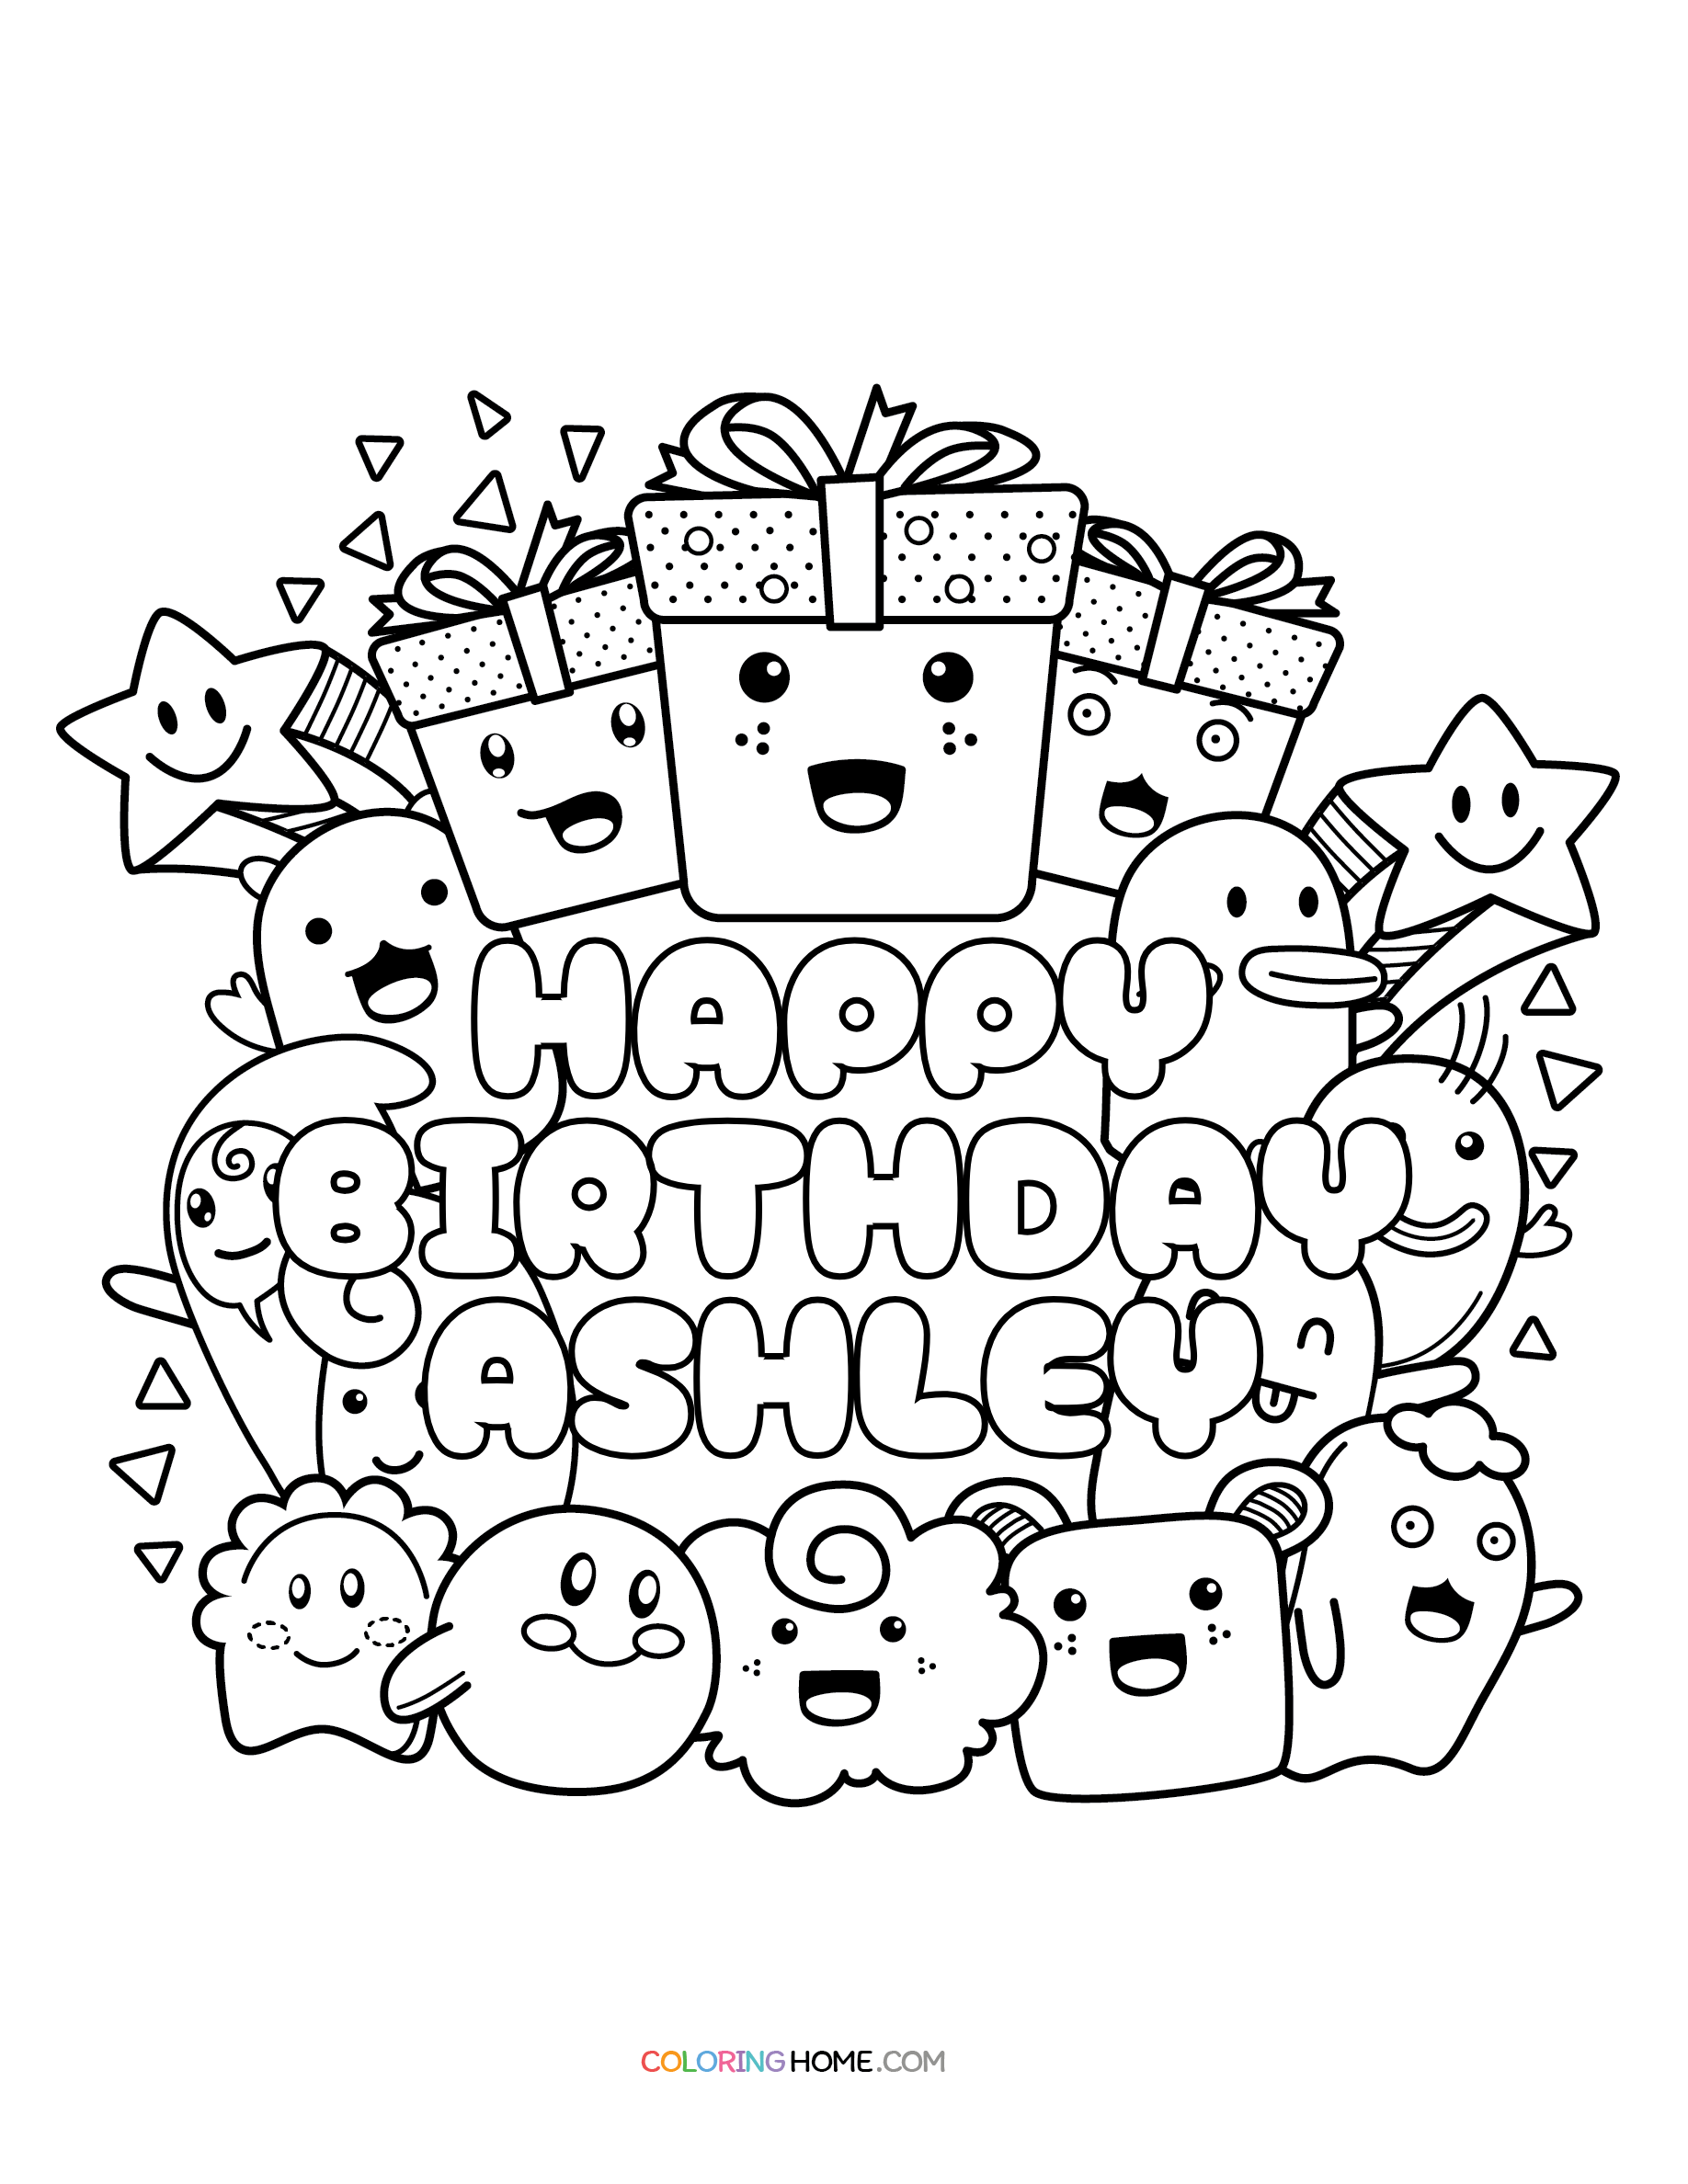 Happy Birthday Ashley coloring page